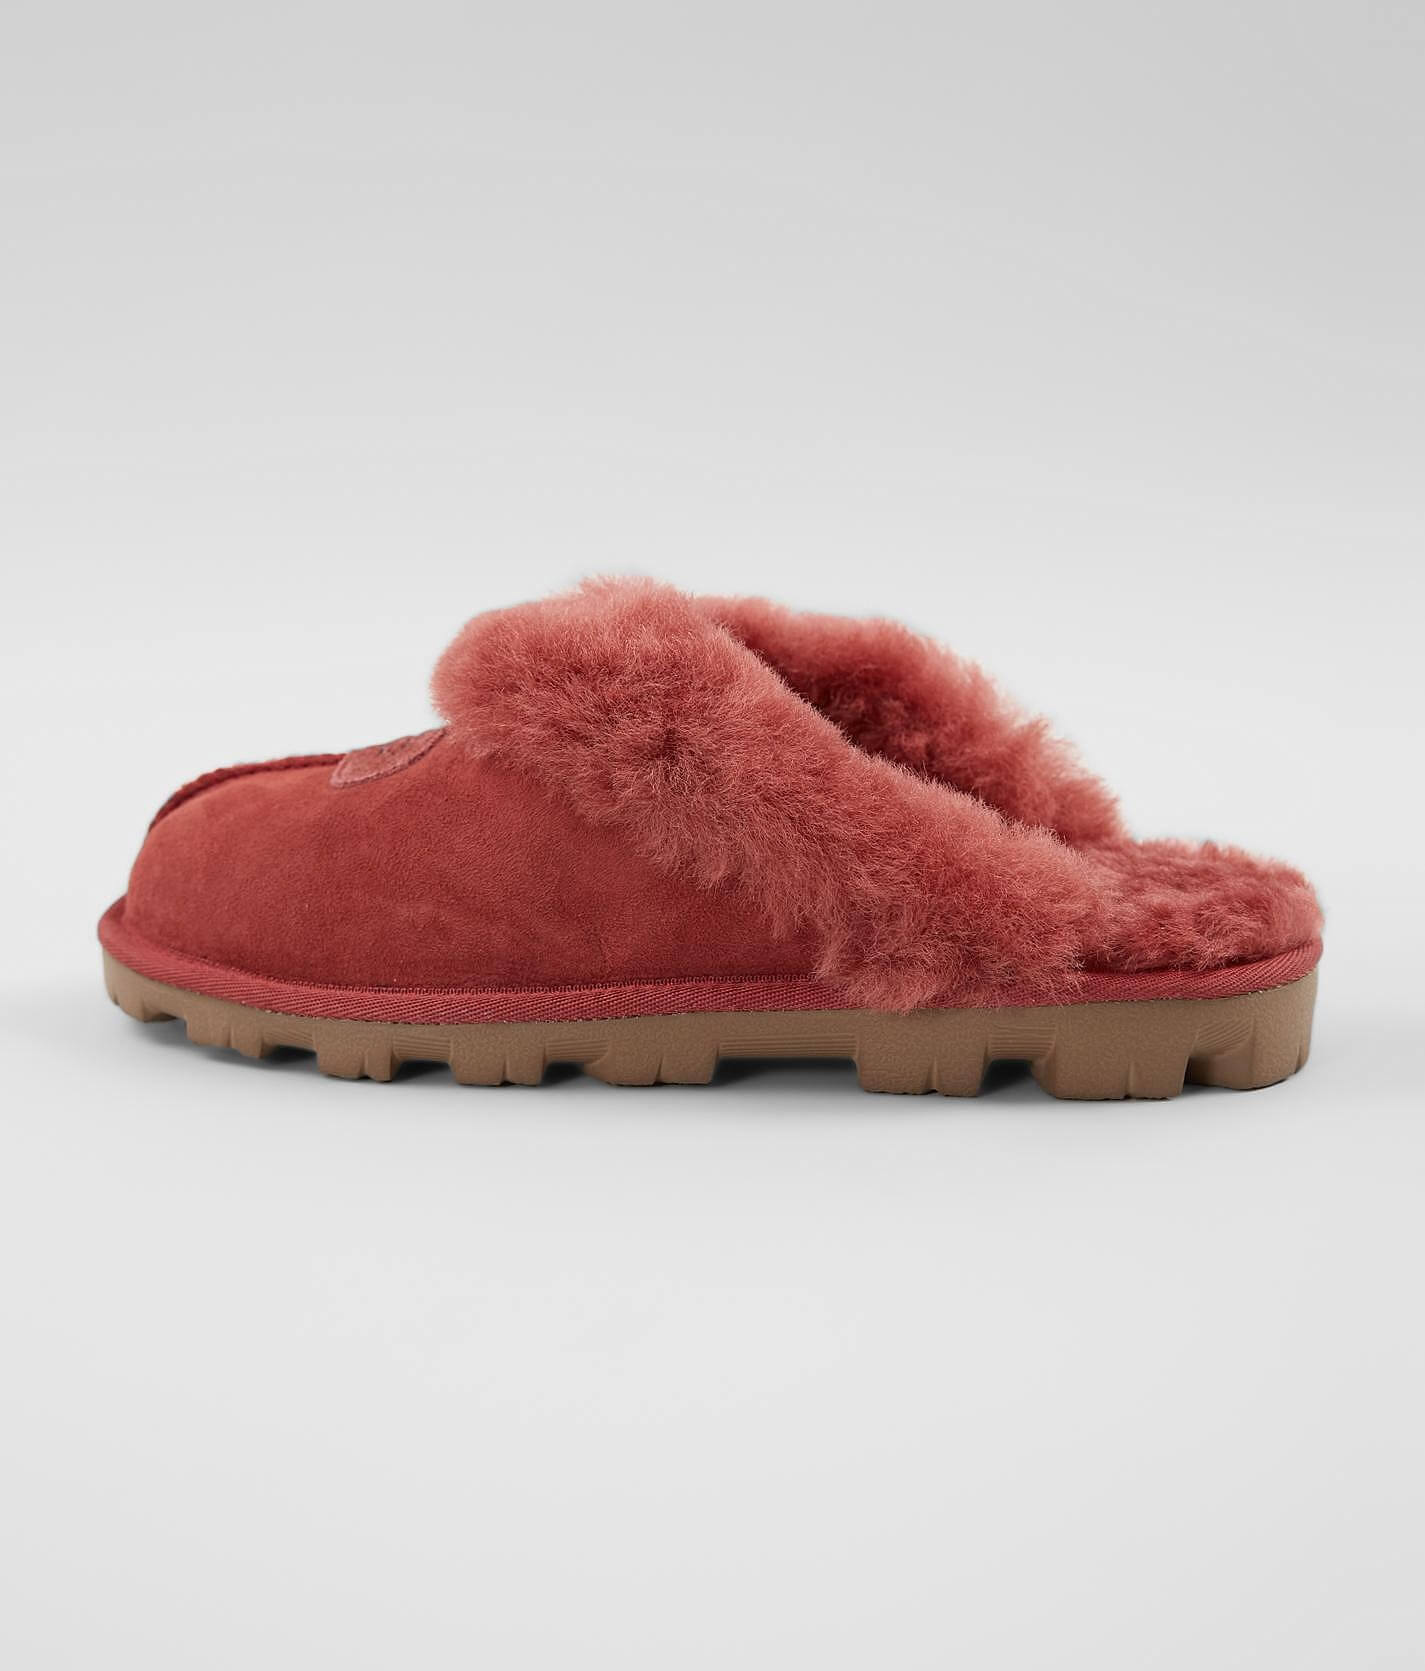 maroon ugg slippers